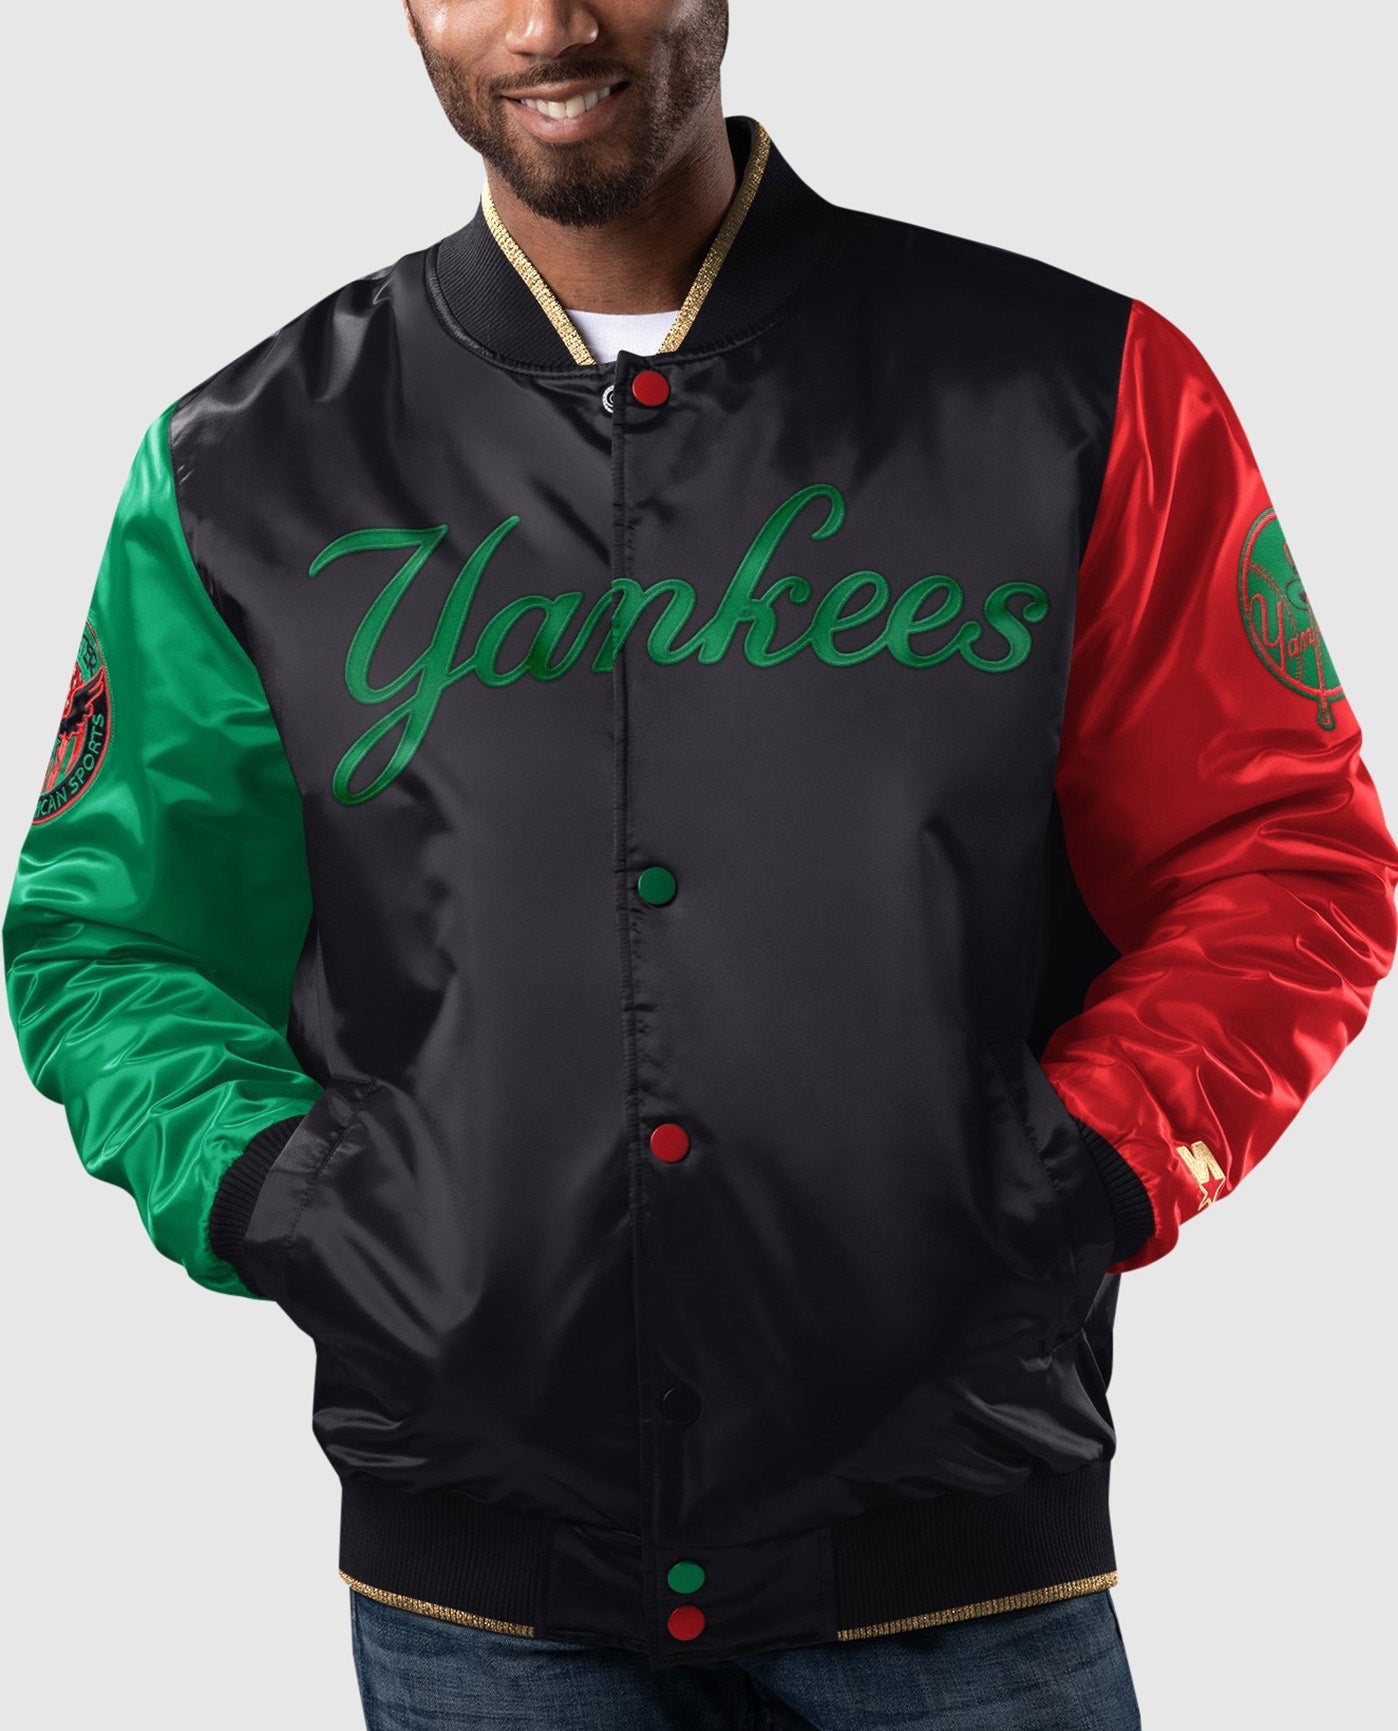 Ty Mopkins Black History Month New York Yankees Full-Snap Jacket